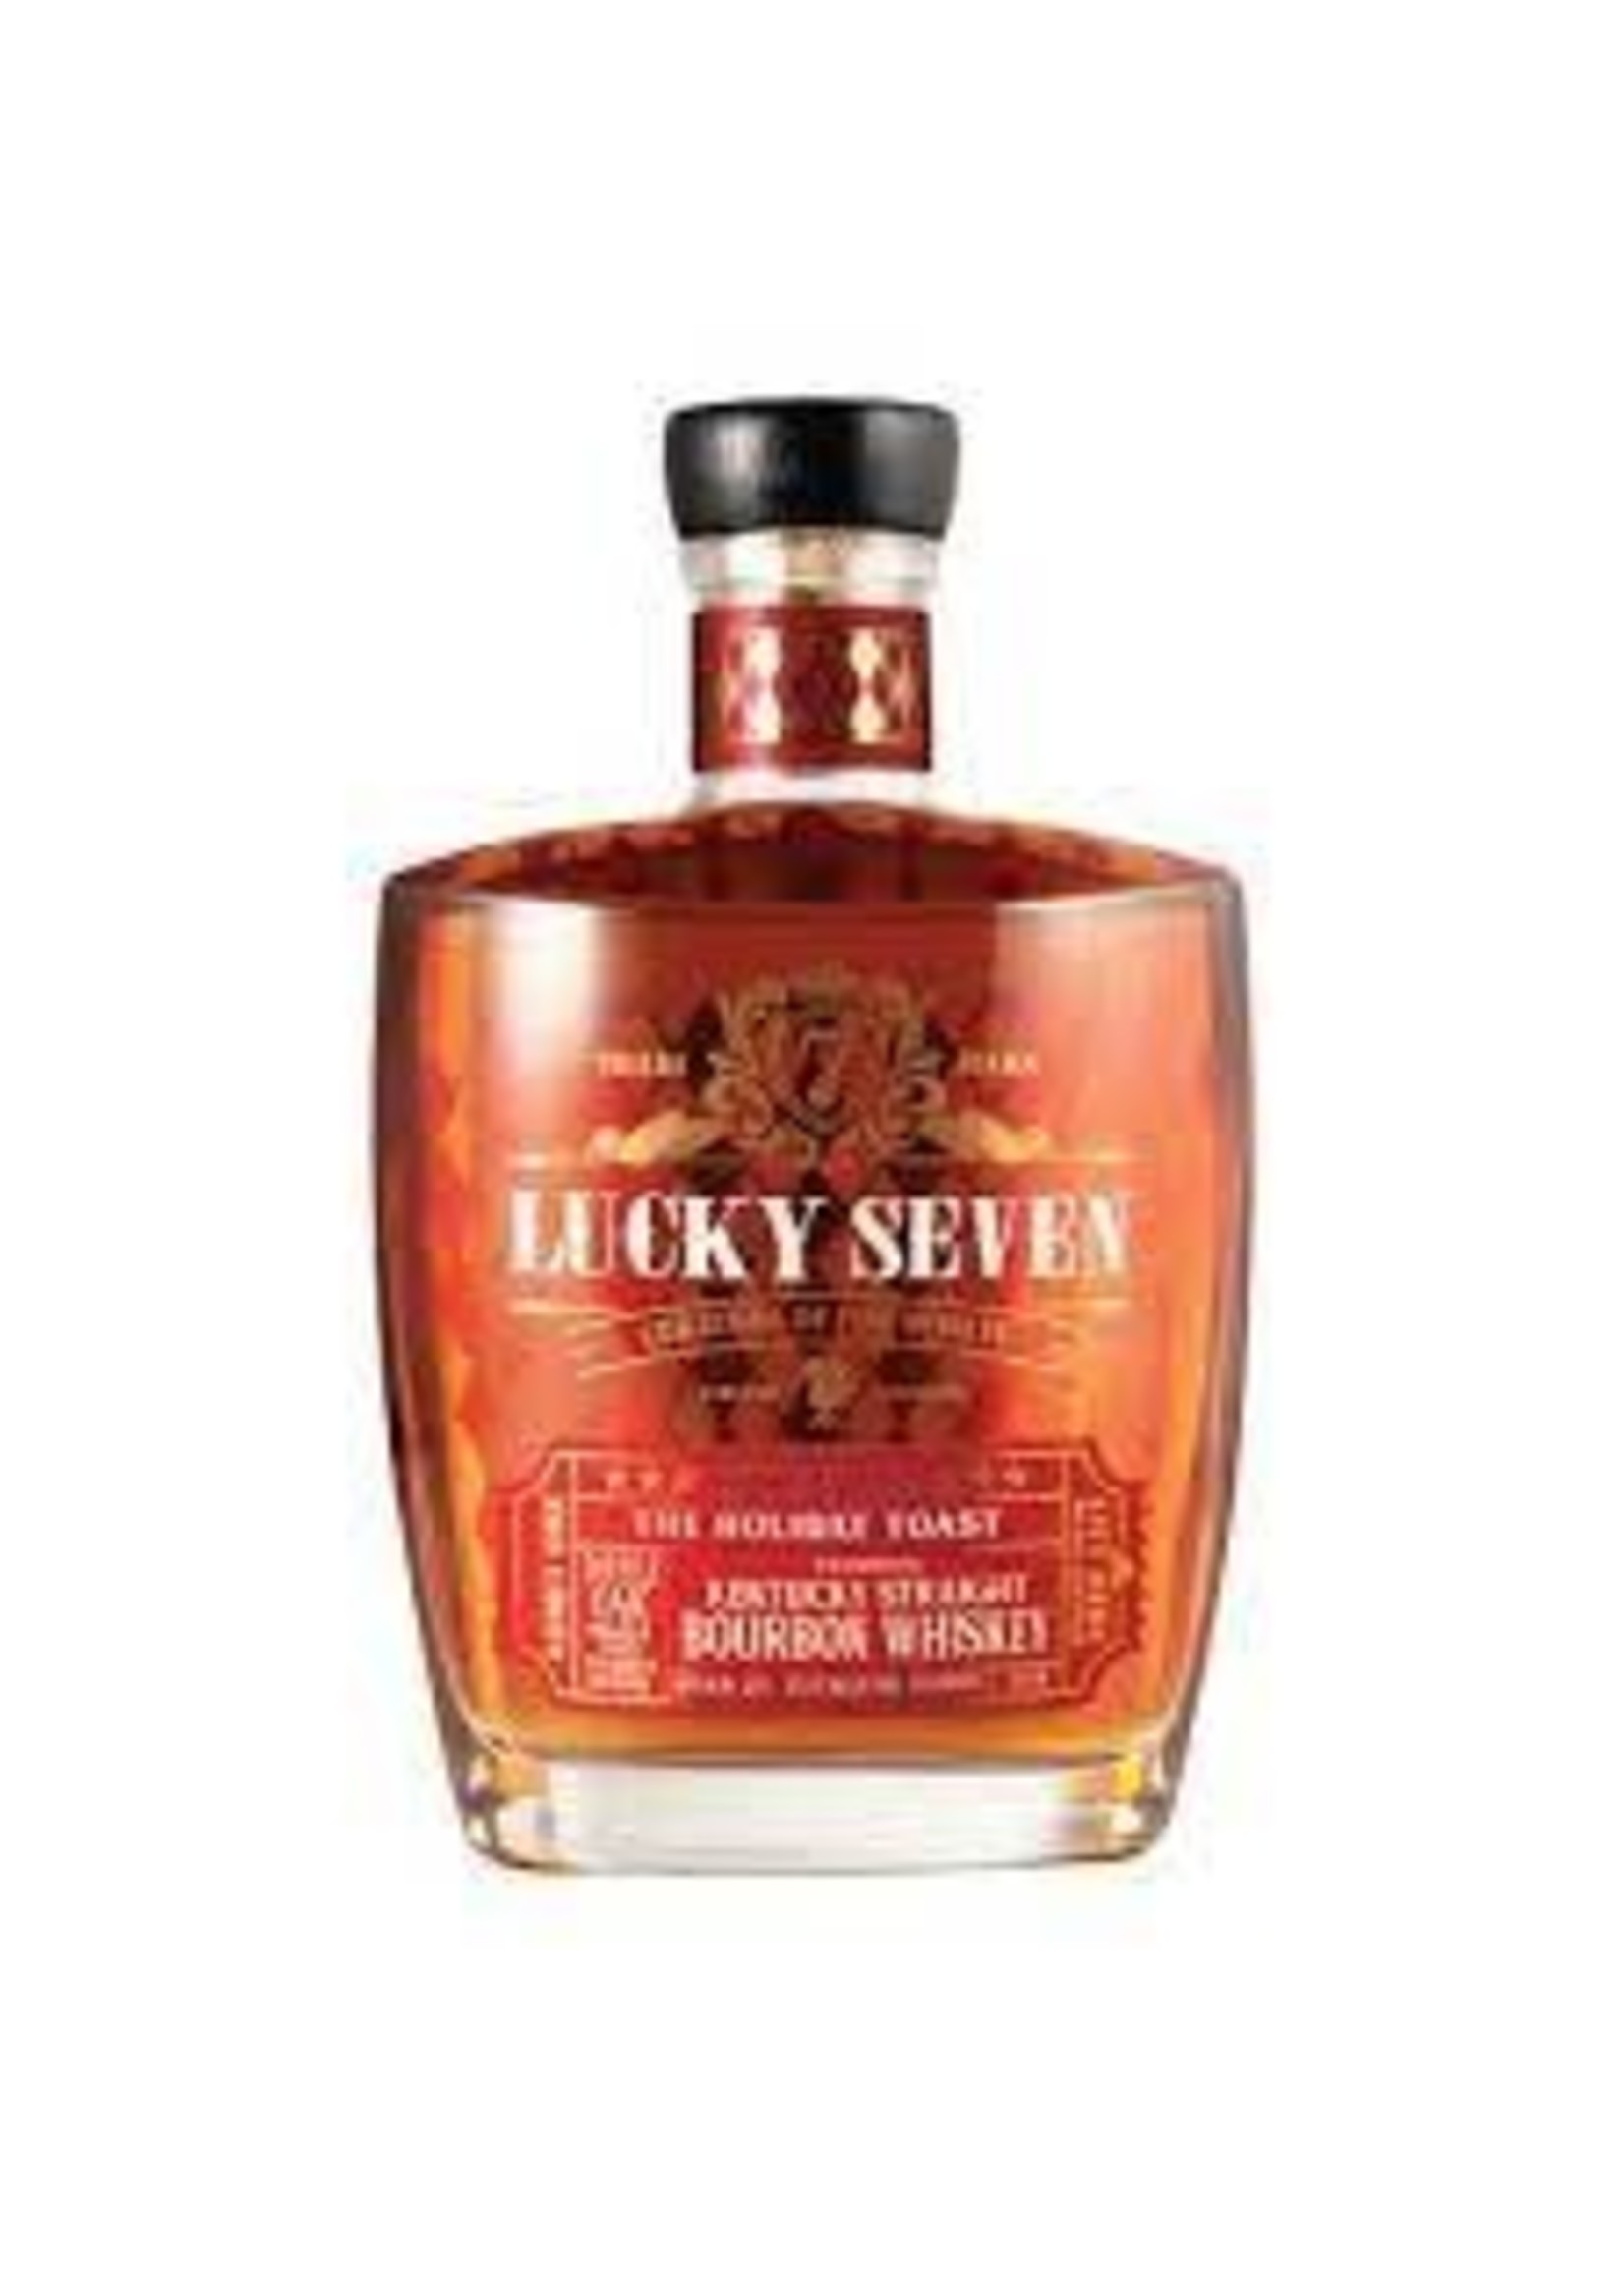 Lucky Seven The Holiday Toast Kentucky Straight Bourbon 750ml